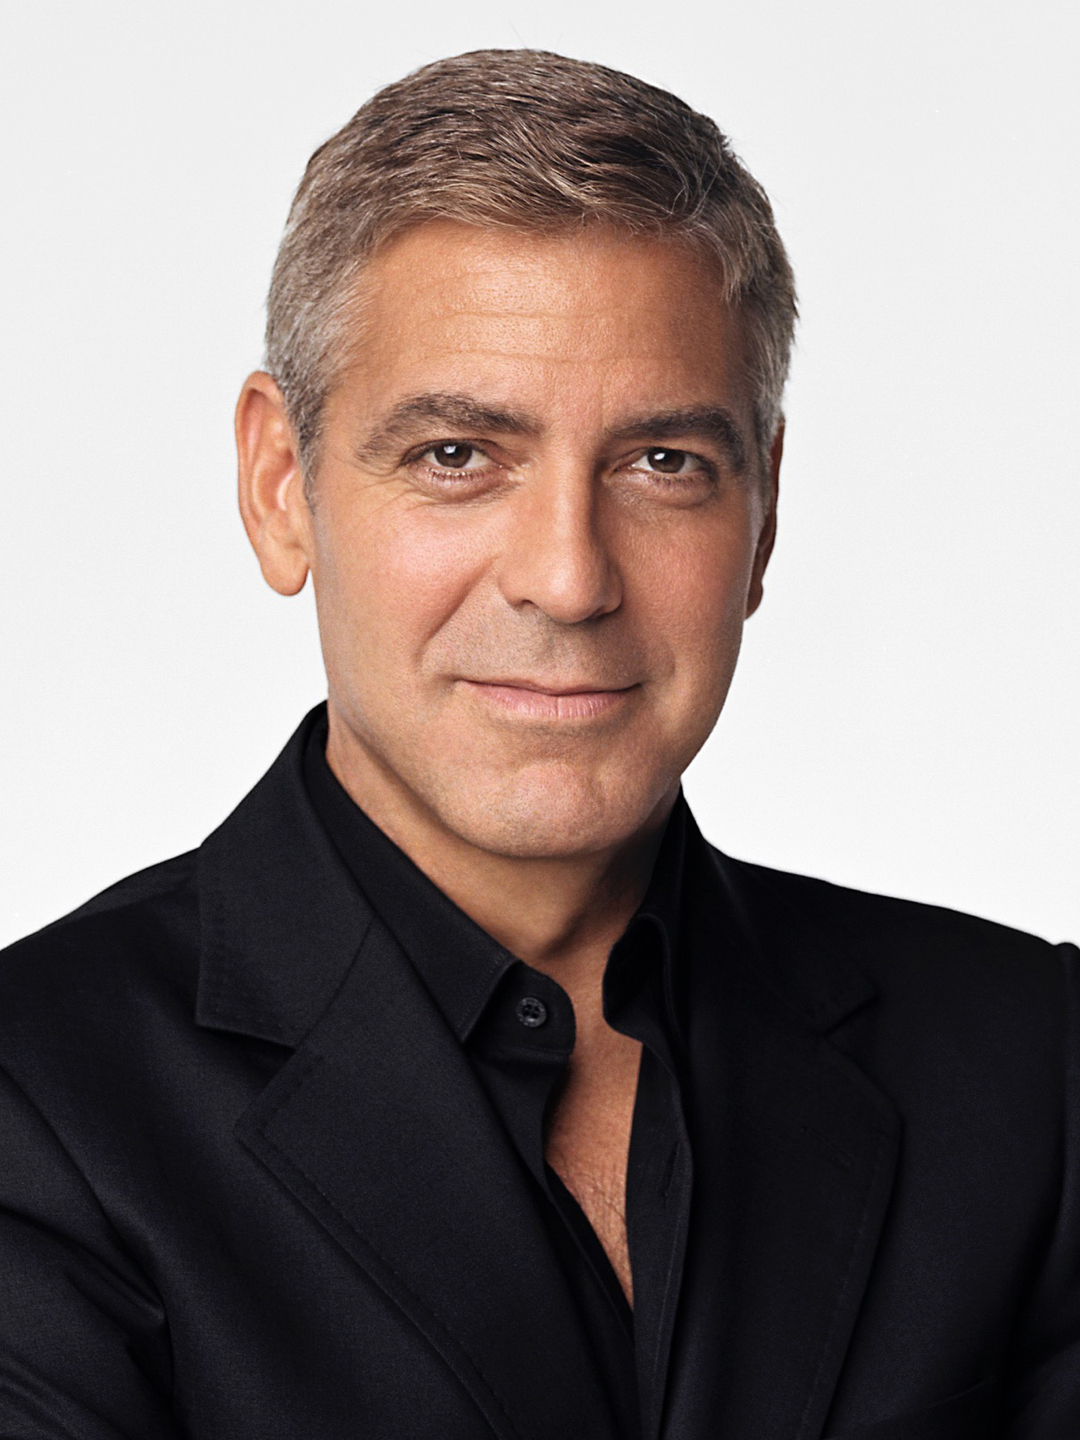 George Clooney childhood pics